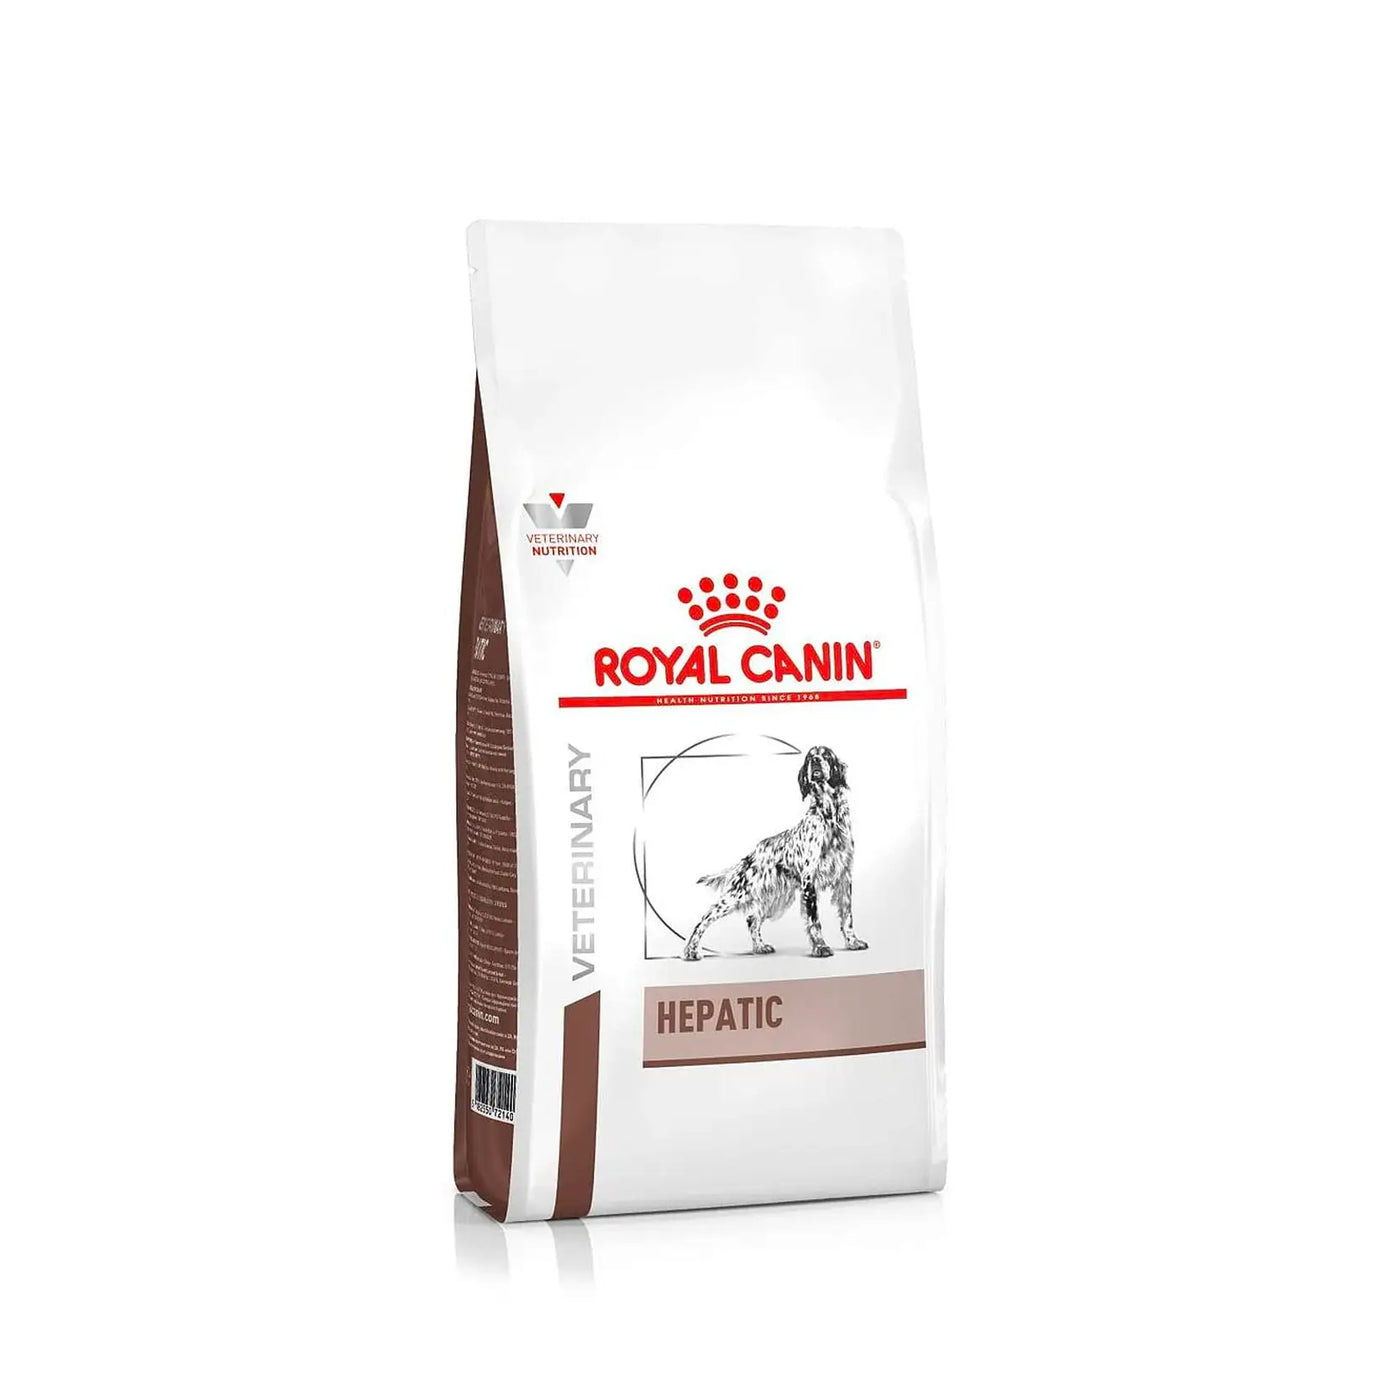 Royal Canin - Canine Hepatic